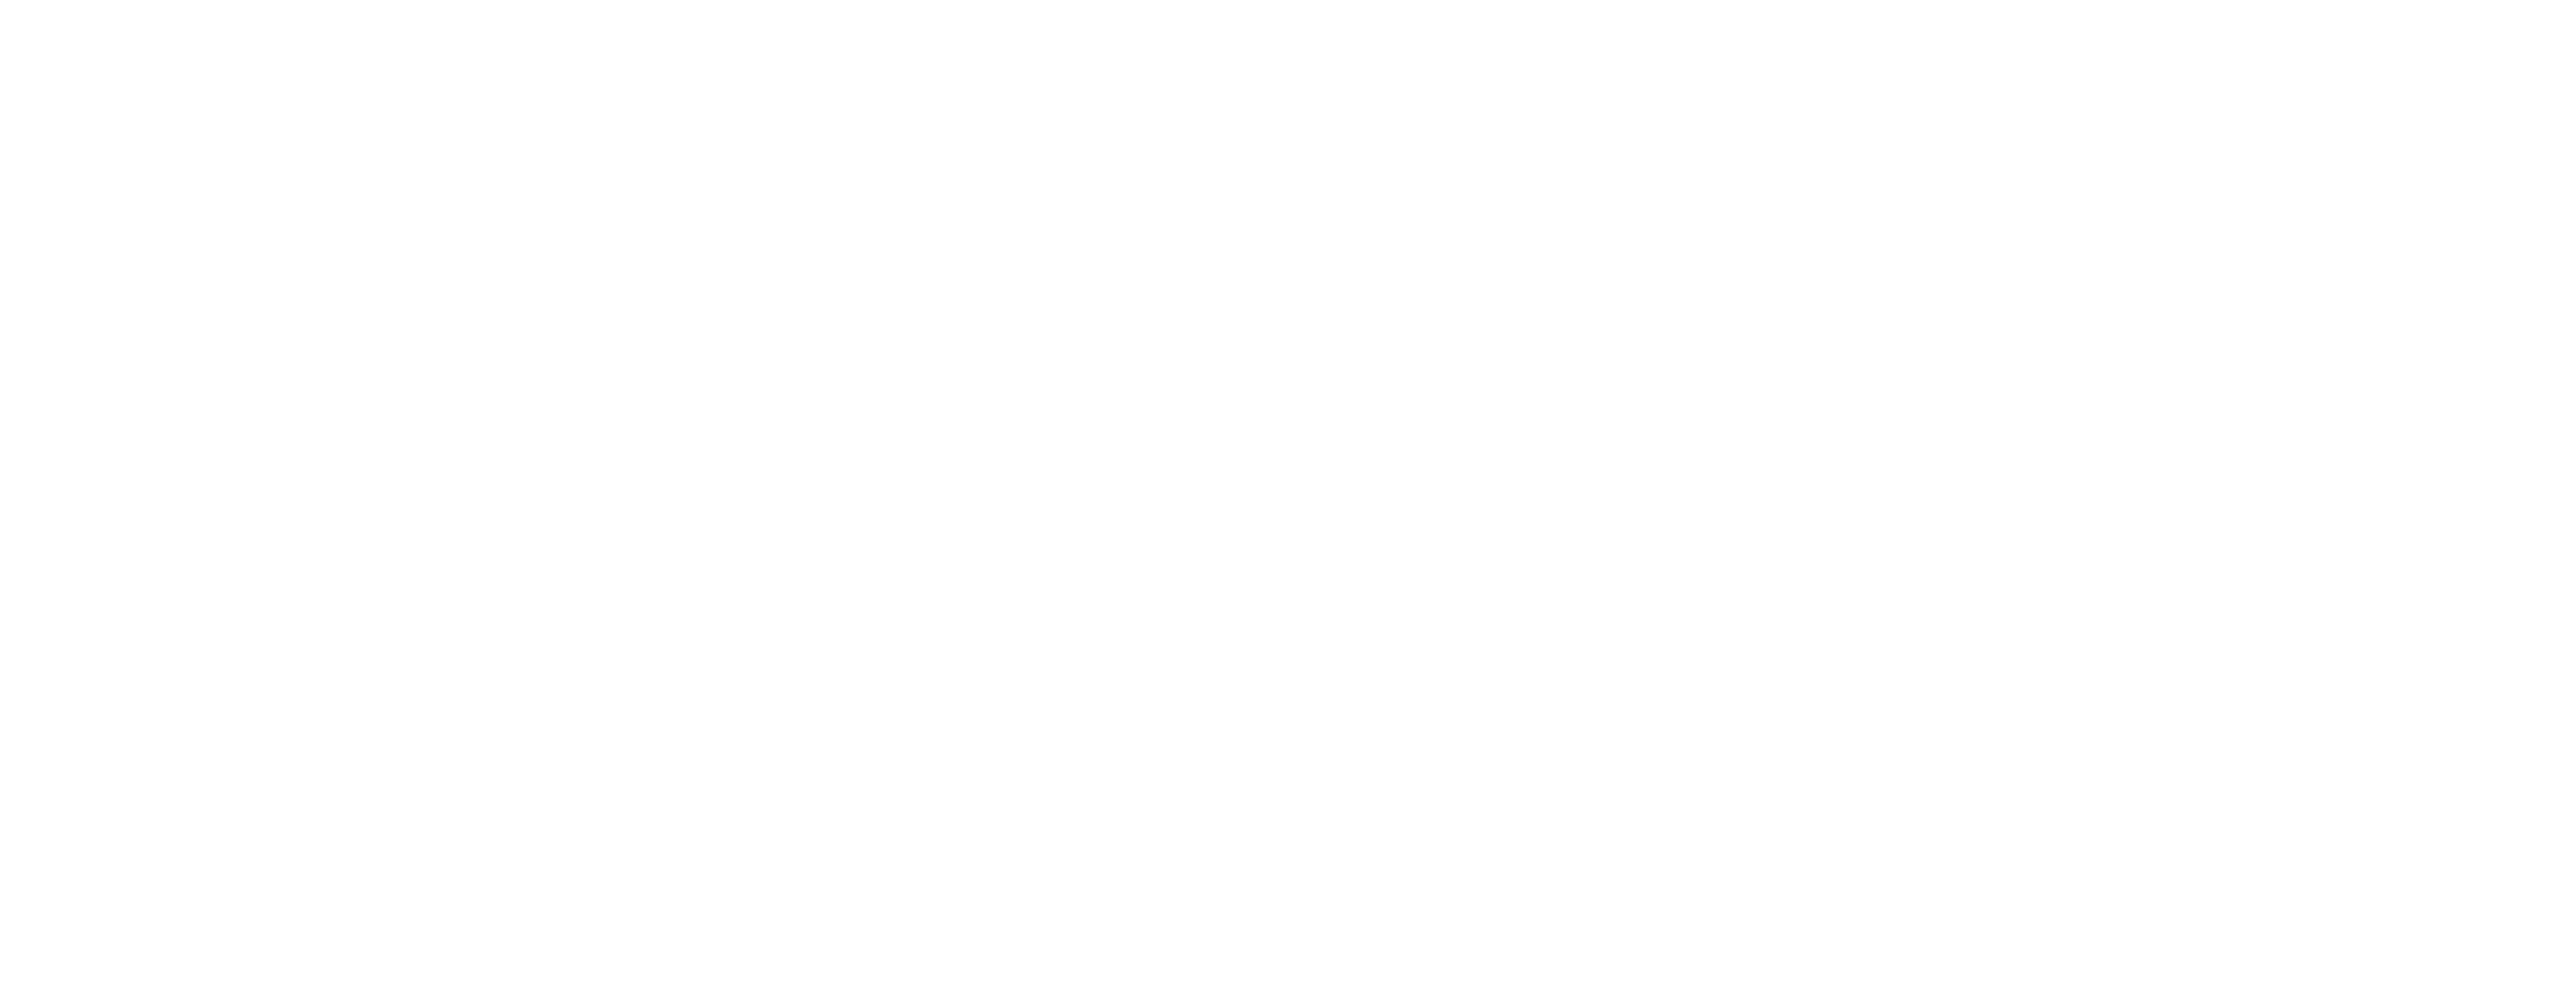 https://test.maroochy.org/wp-content/uploads/2020/03/MixFM_LOGO_on-white.png